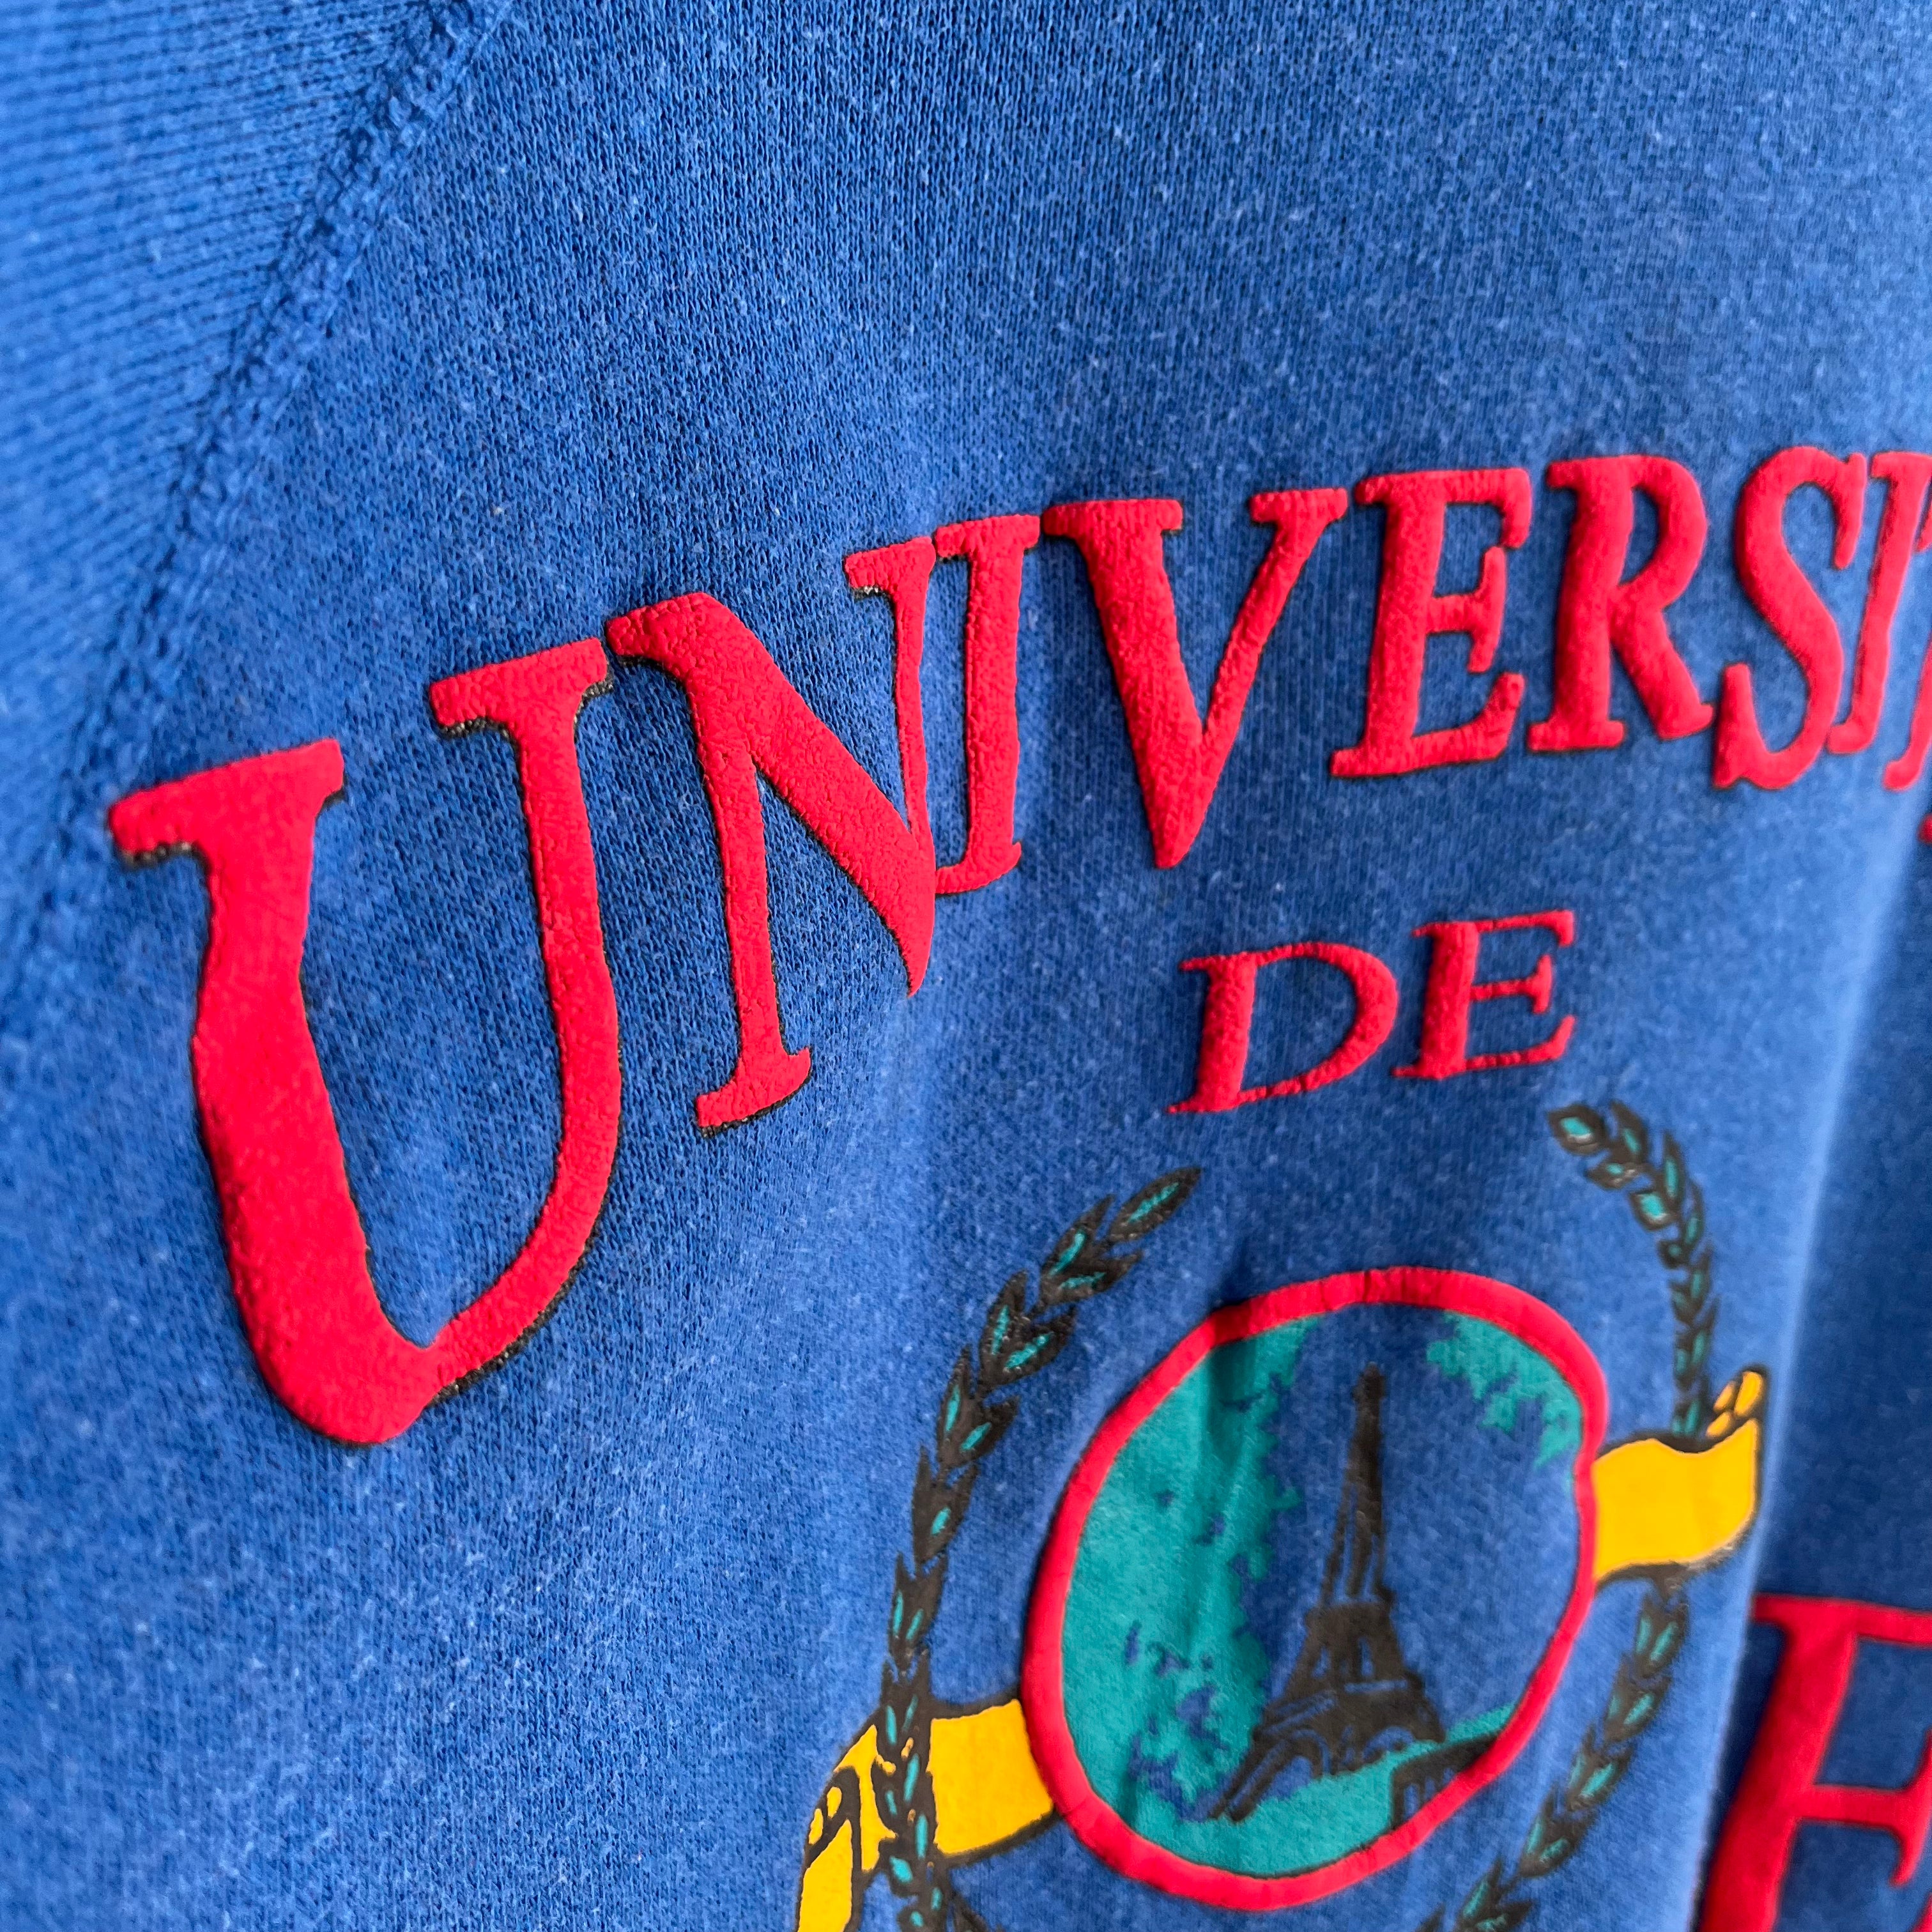 1980s Universite De Francaise USA Made Sweatshirt by Tultex